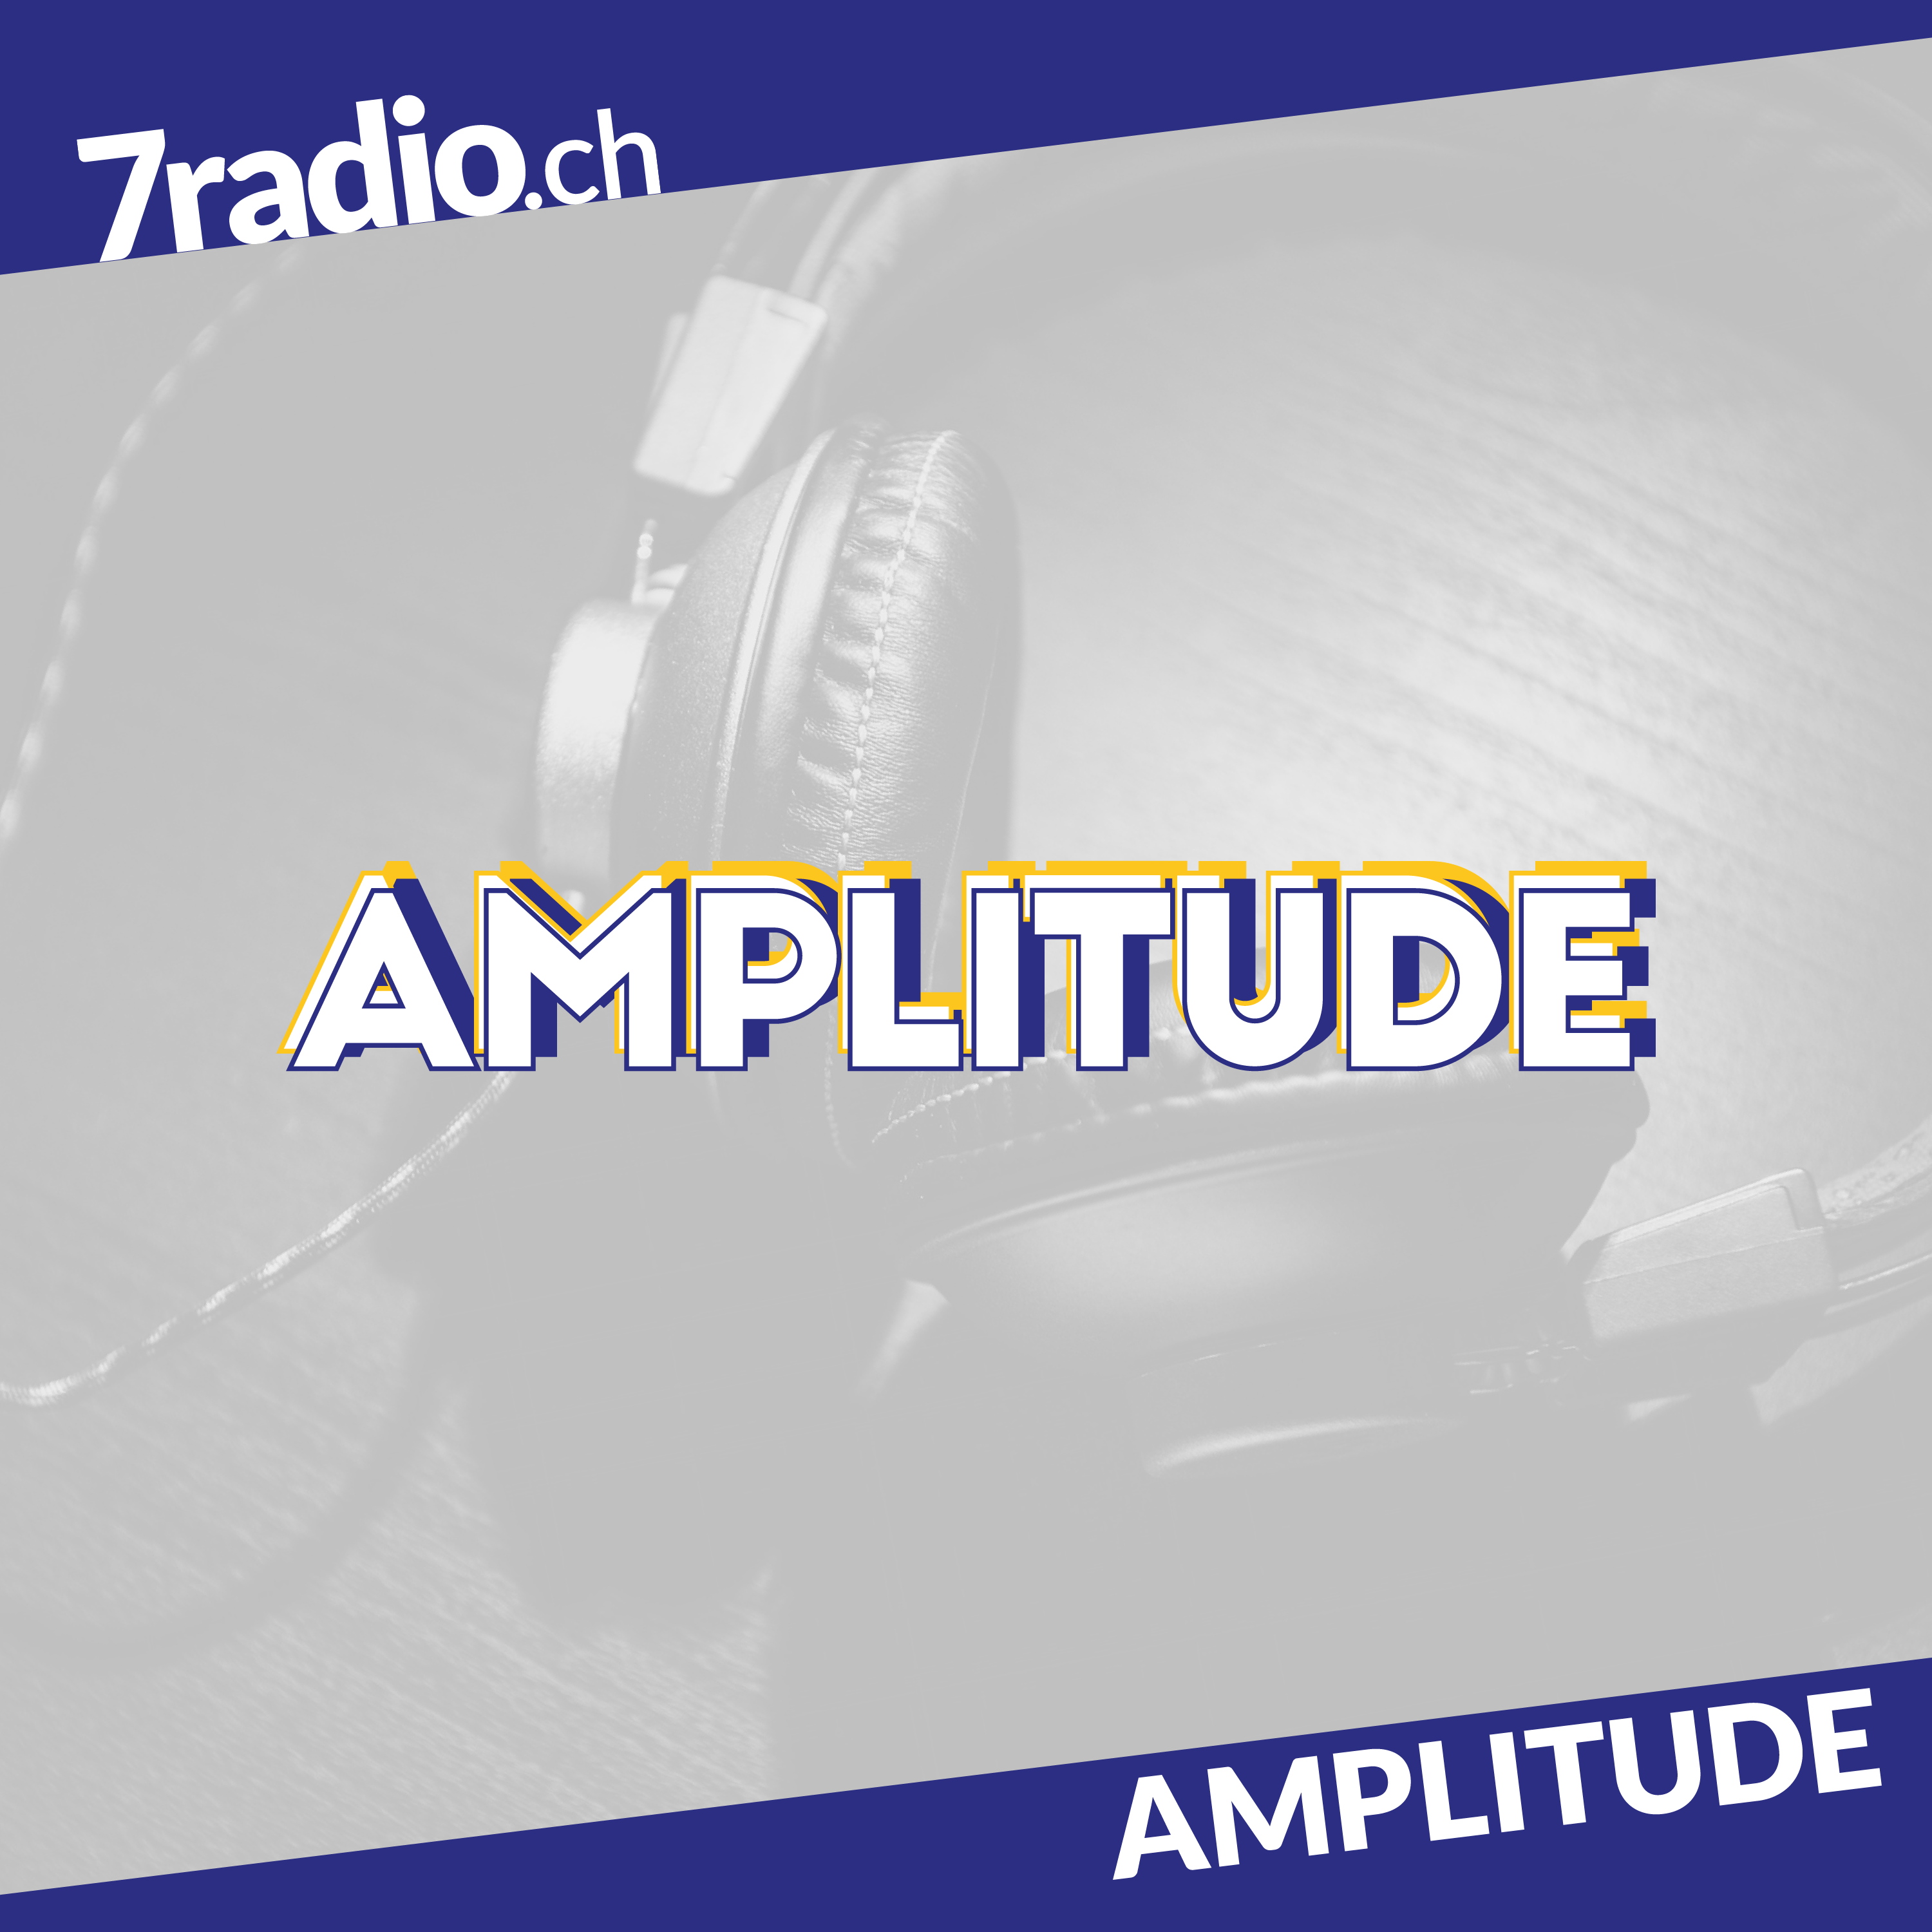 7radio | Amplitude